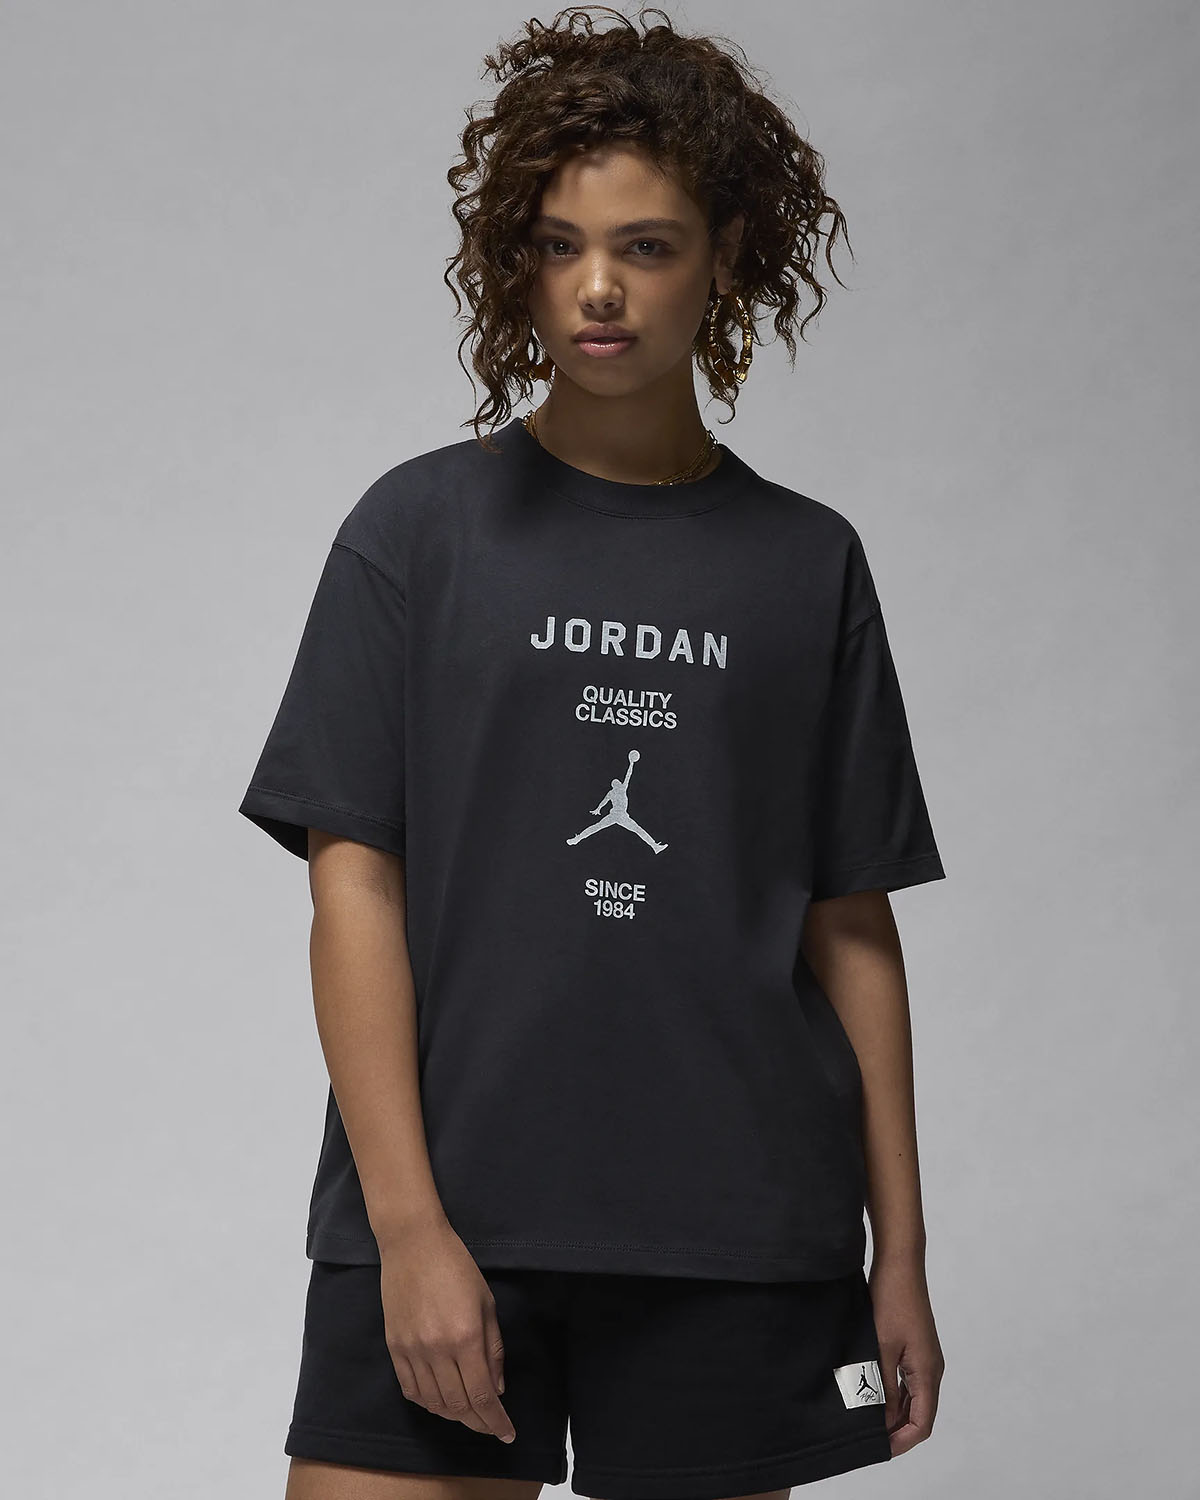 Jordan Womens Girlfriend T Shirt Black White